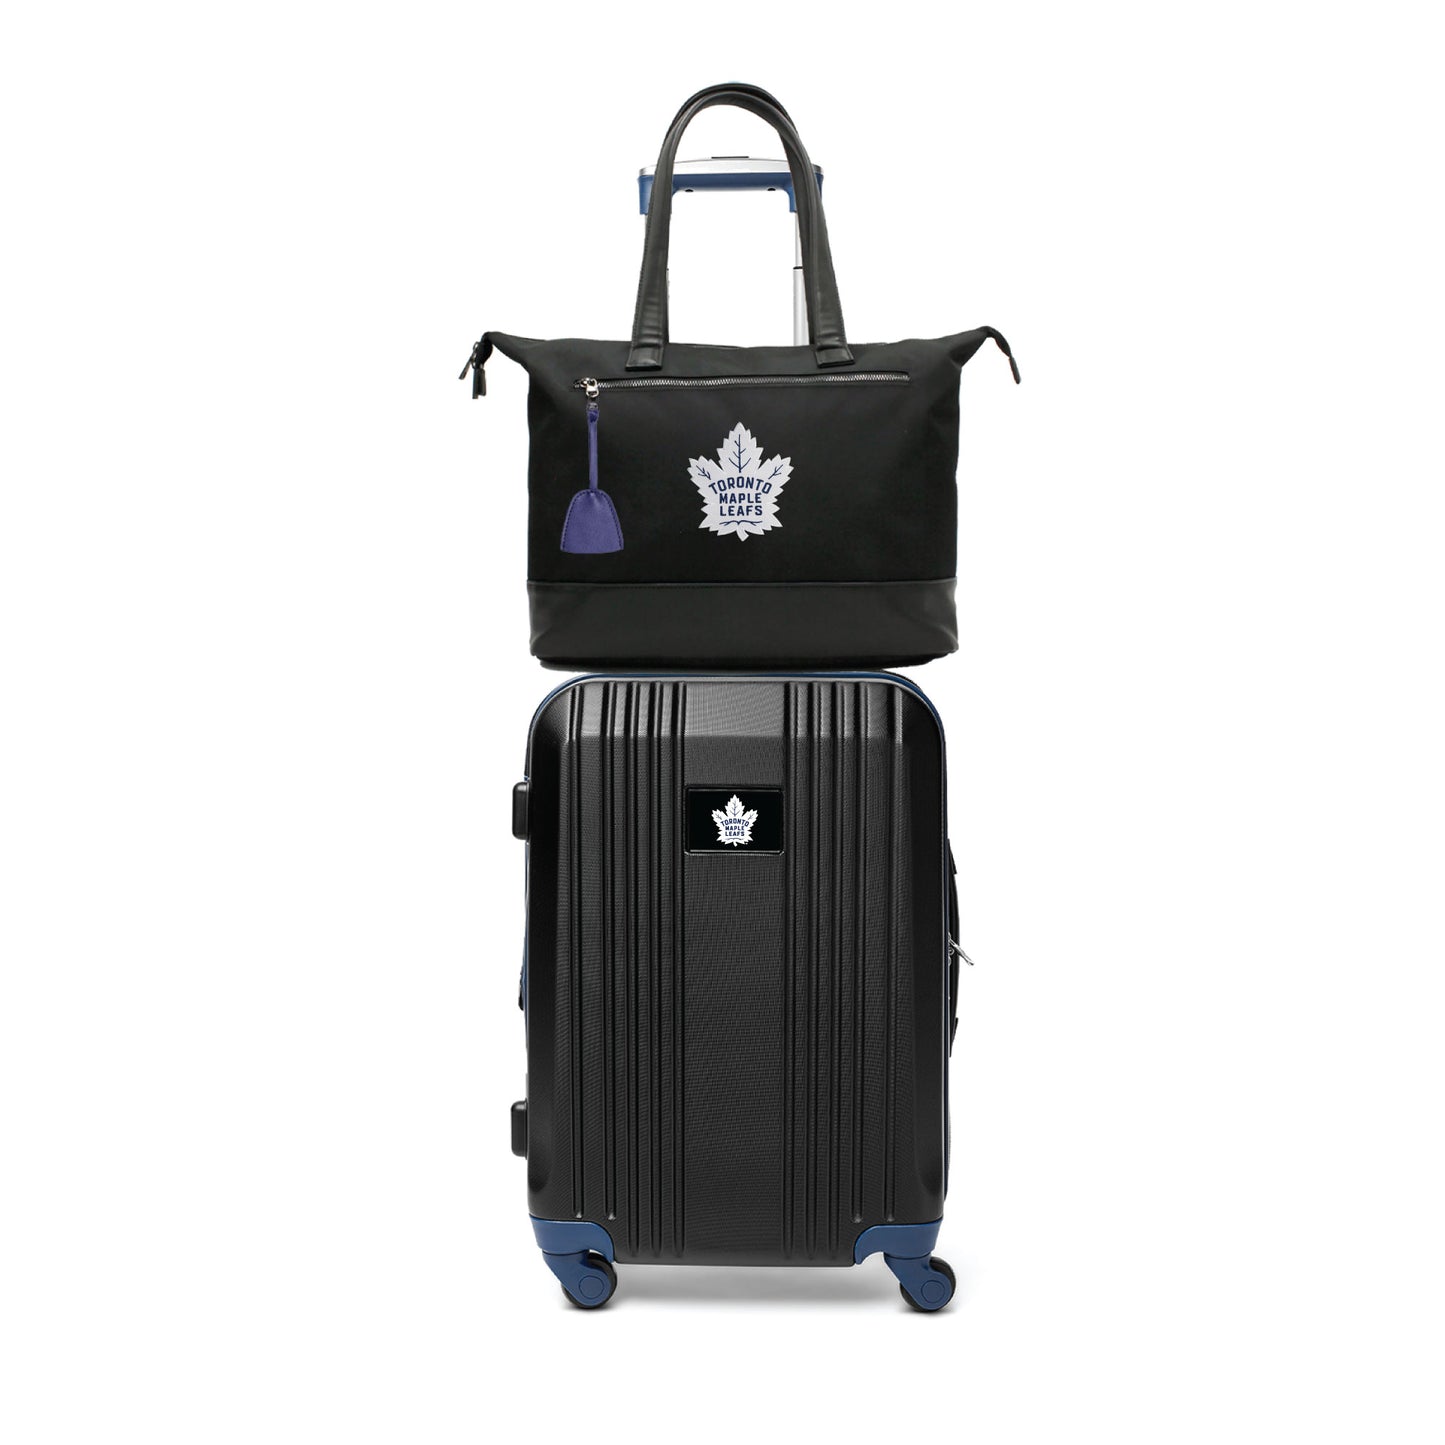 Toronto Maple Leafs Premium Laptop Tote Bag and Luggage Set